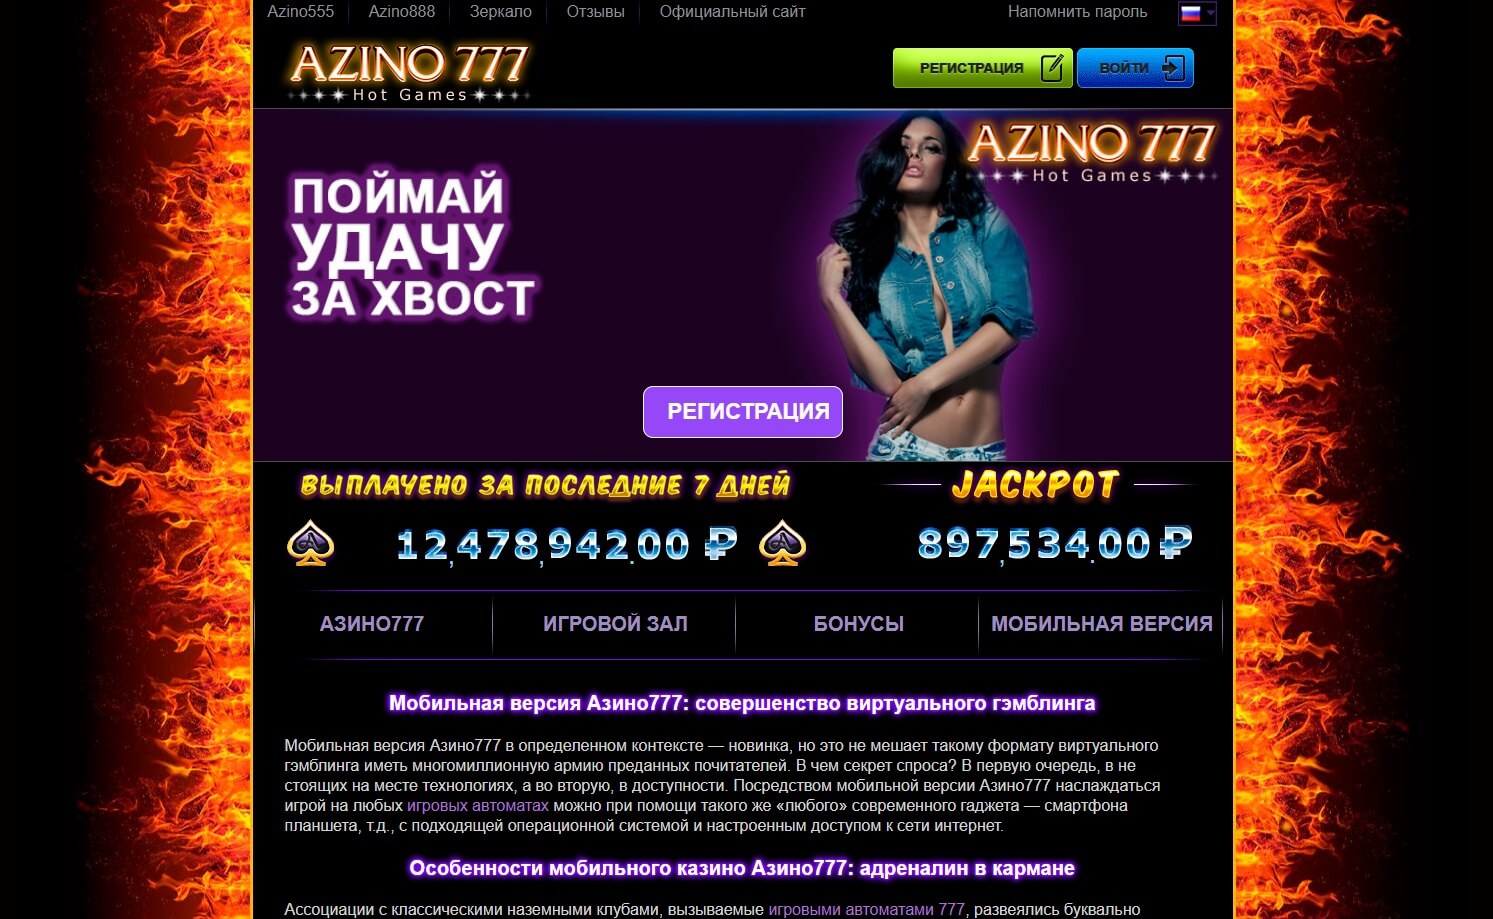 Сайт азино777 azino777 casino pw. Azino777 мобильная. Казино азино777 мобильная версия. Азино777 бонус 777. Азино777 мобильная версия зеркало.